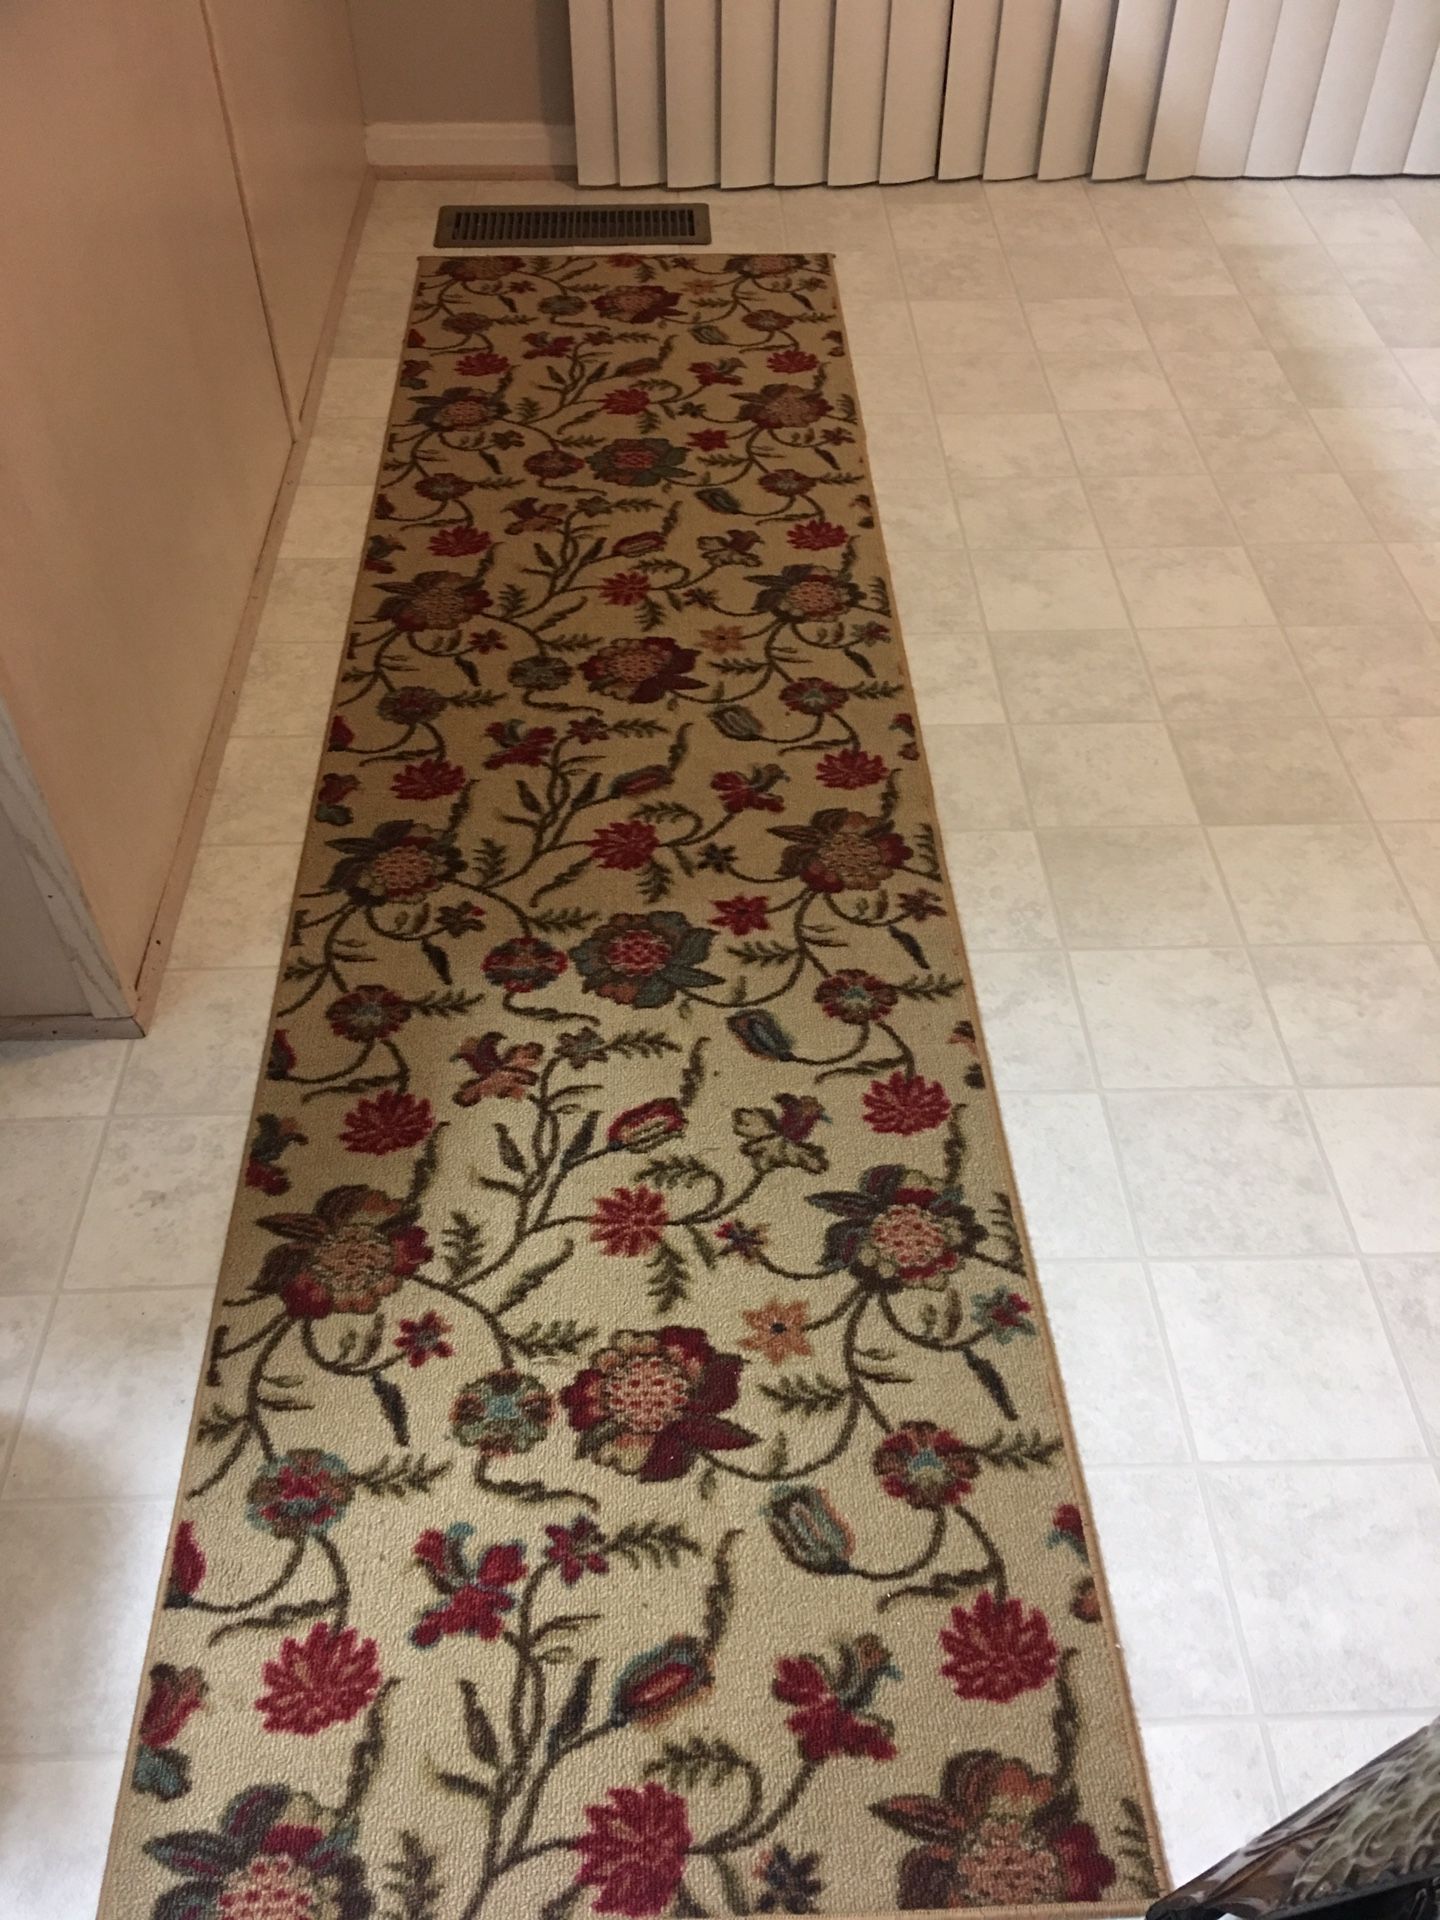 Area rug. Still looks new